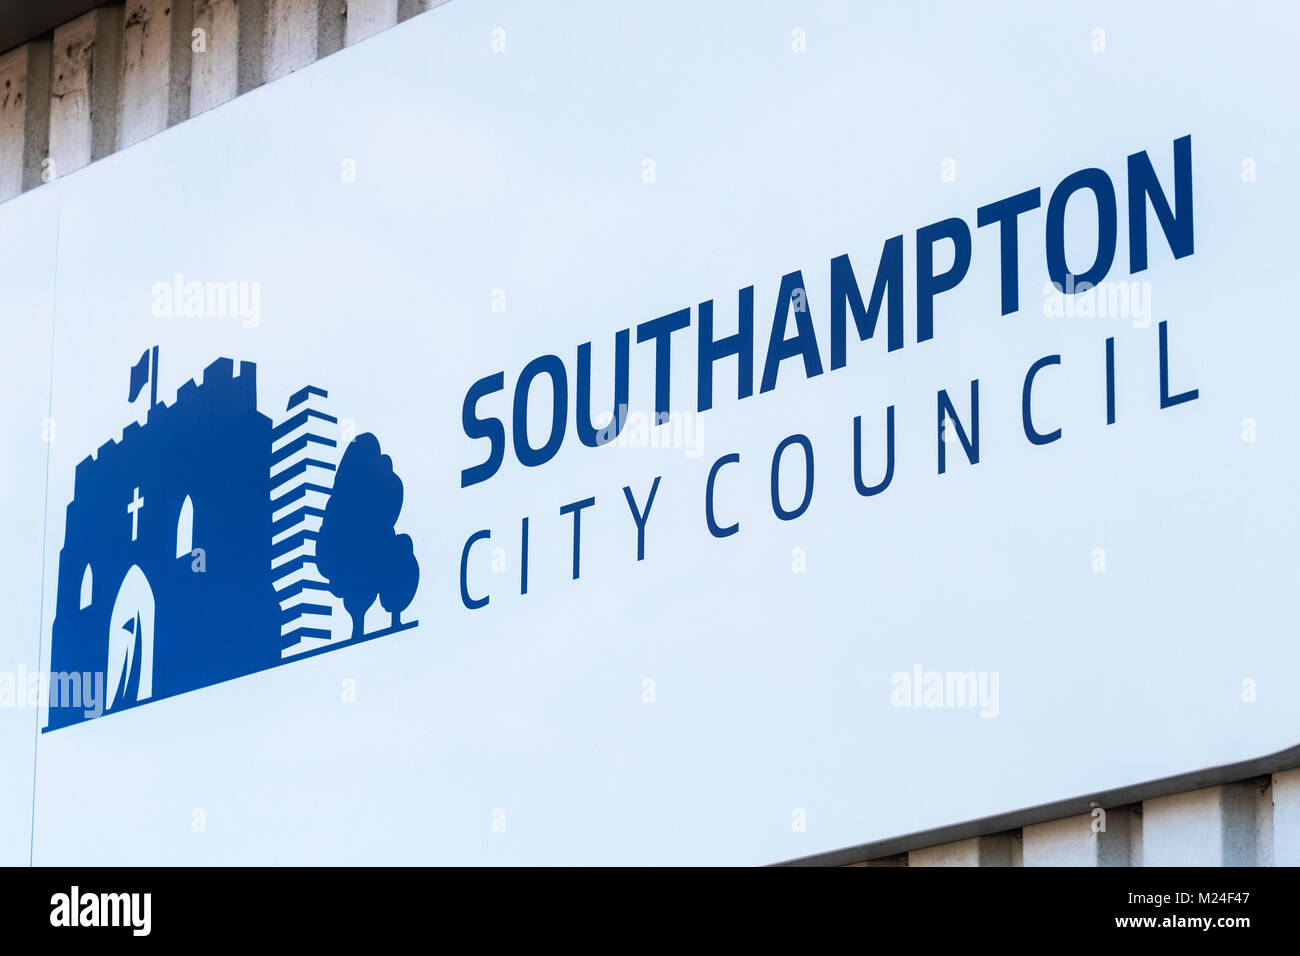 Southampton City Council sign and logo Stock Photo